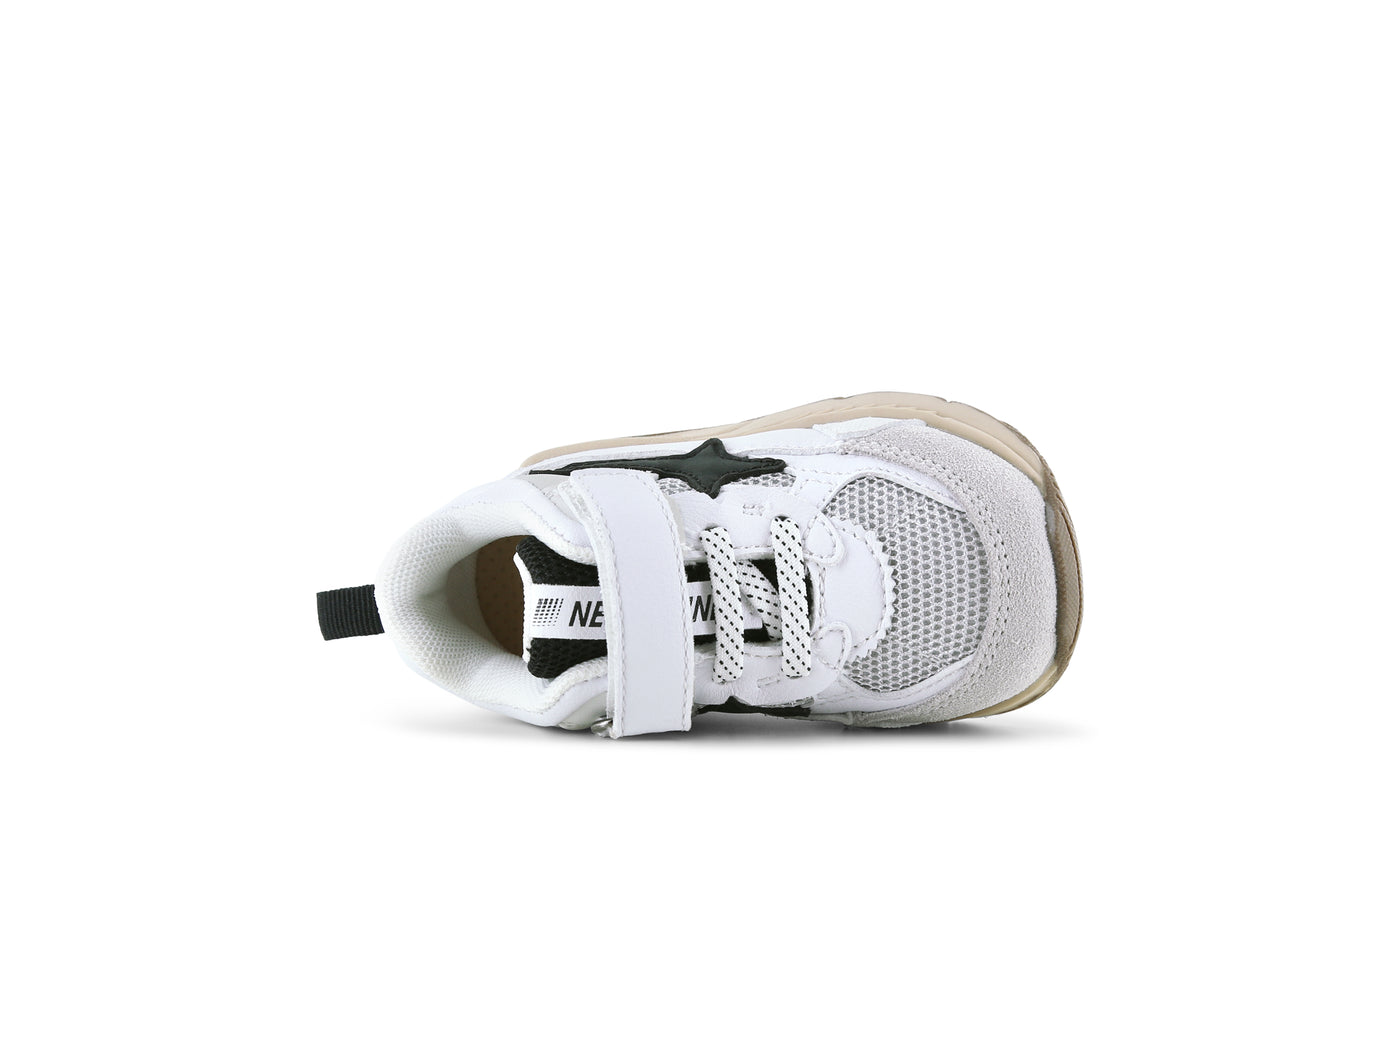 Shoesme s24 Sneaker Black White AO24S001-D